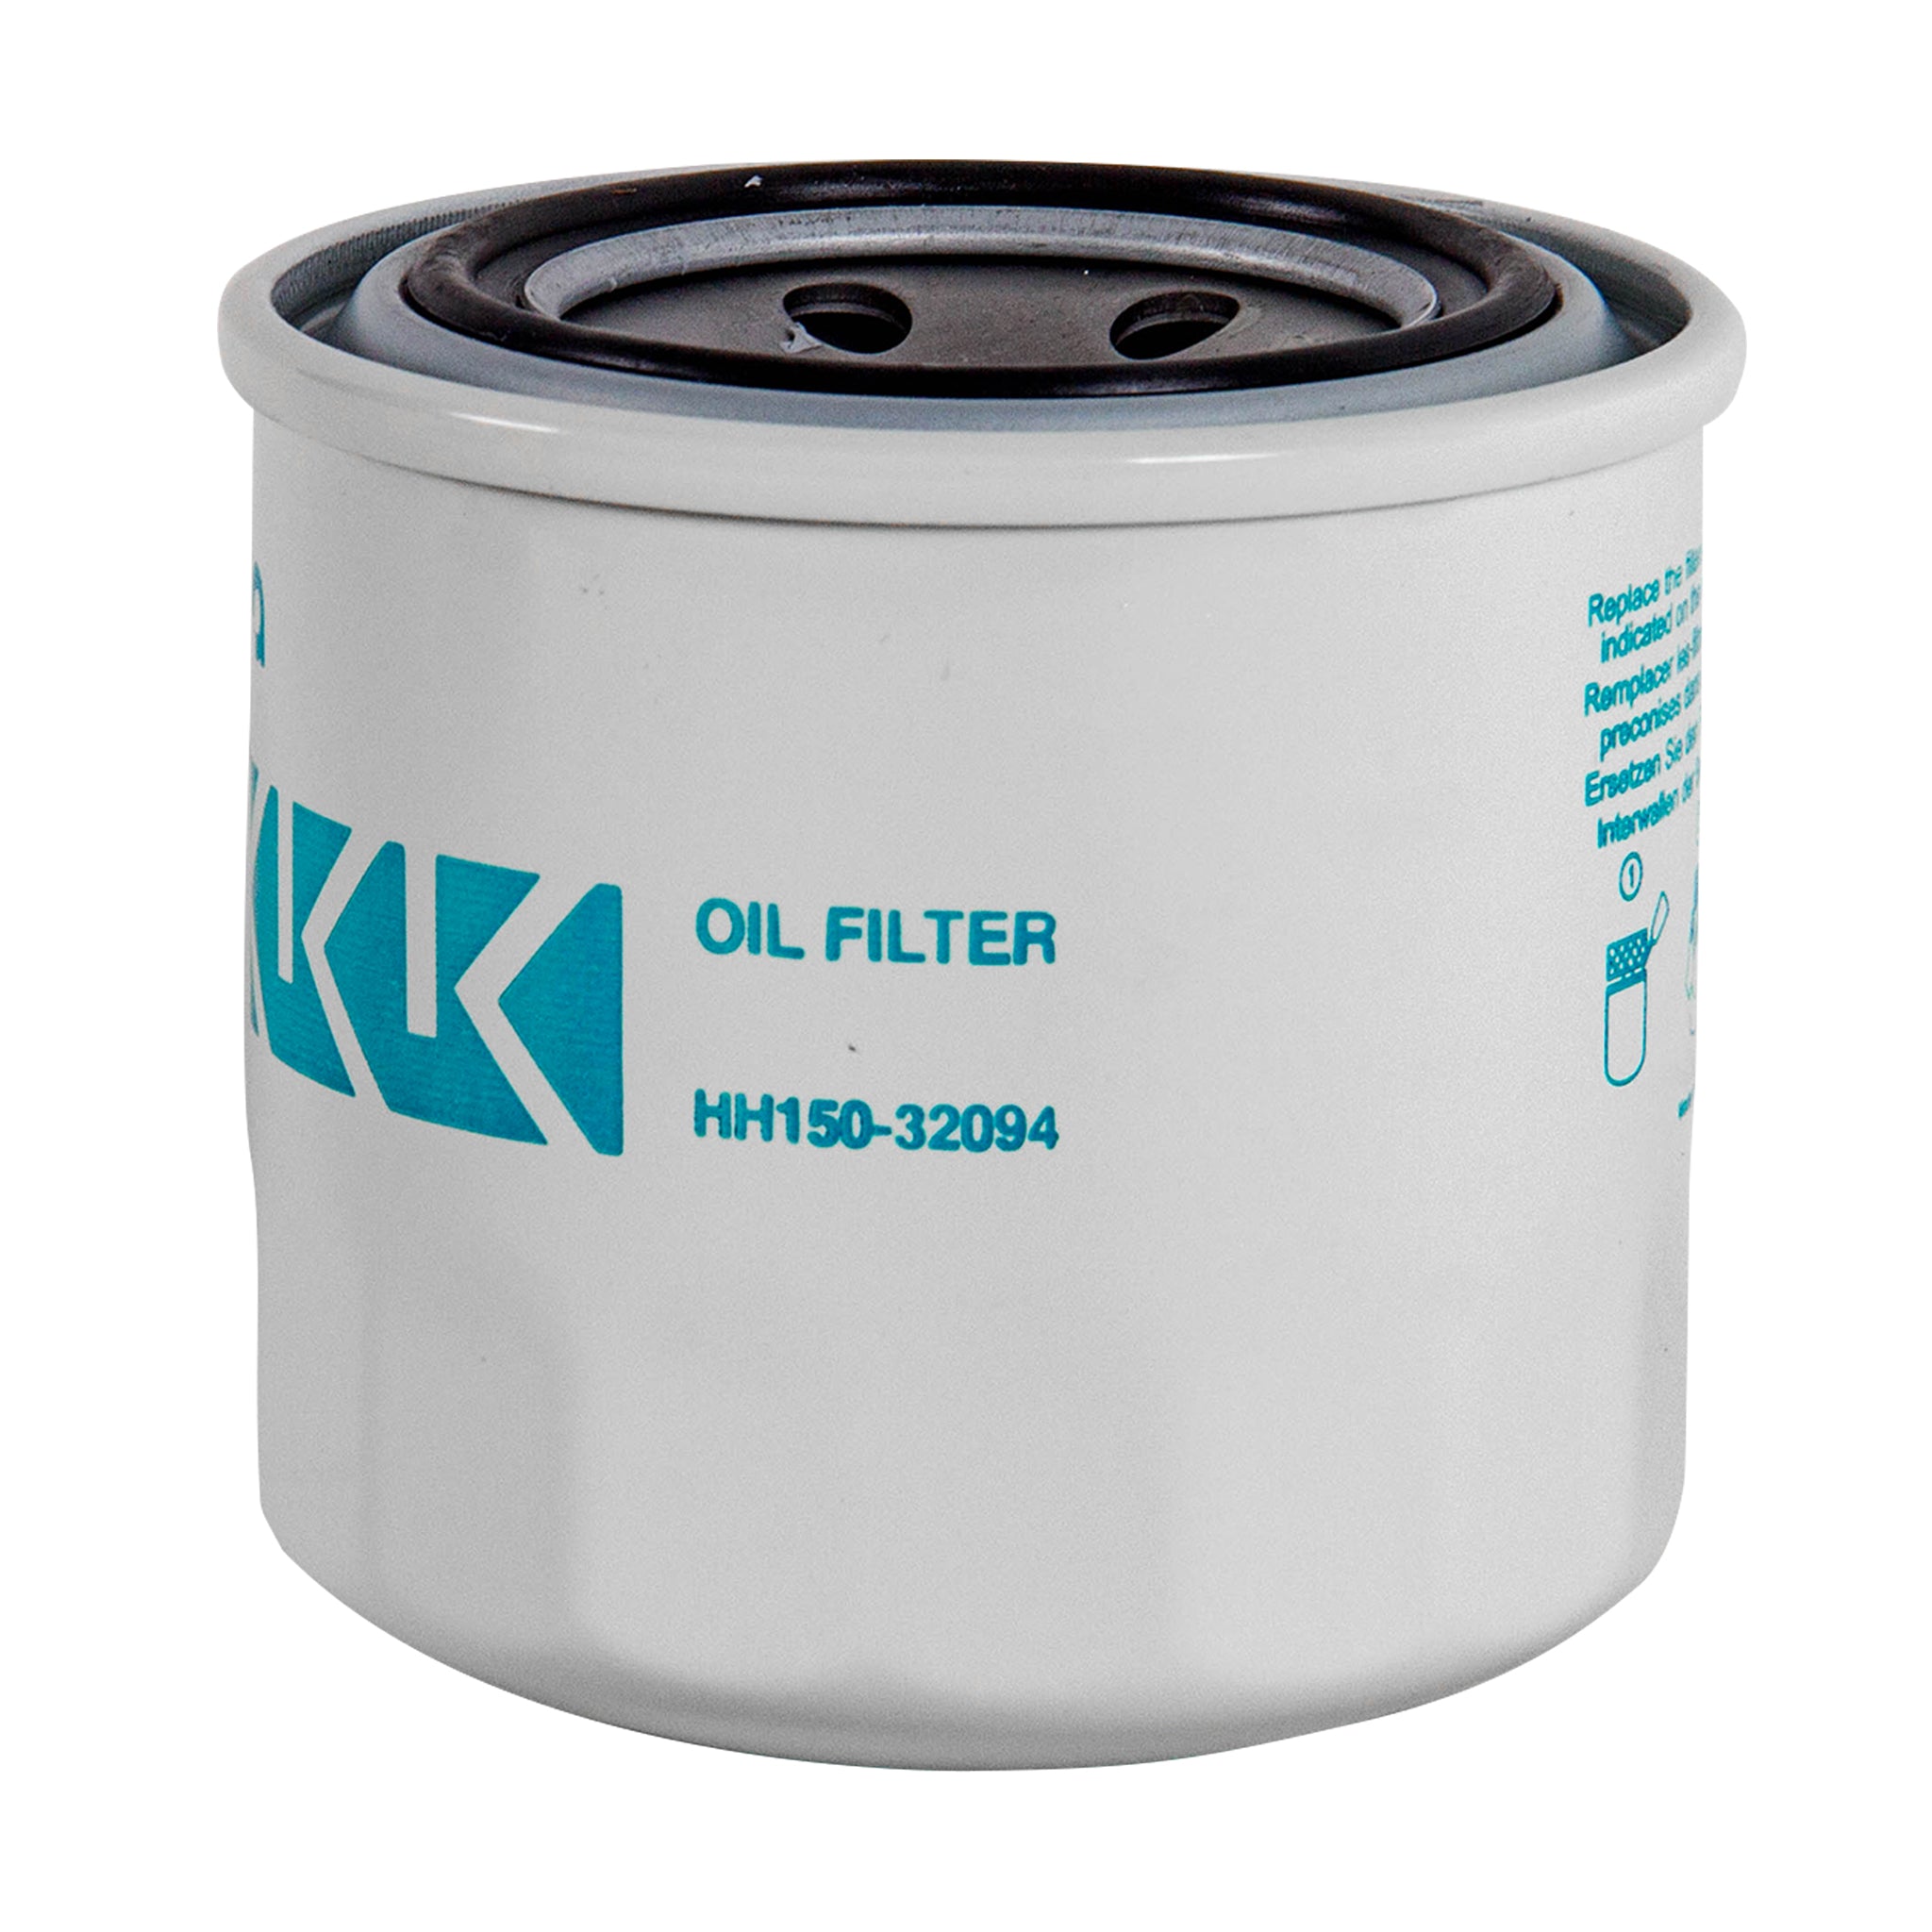 Filtro de aceite del motor Kubota HH150-32094 